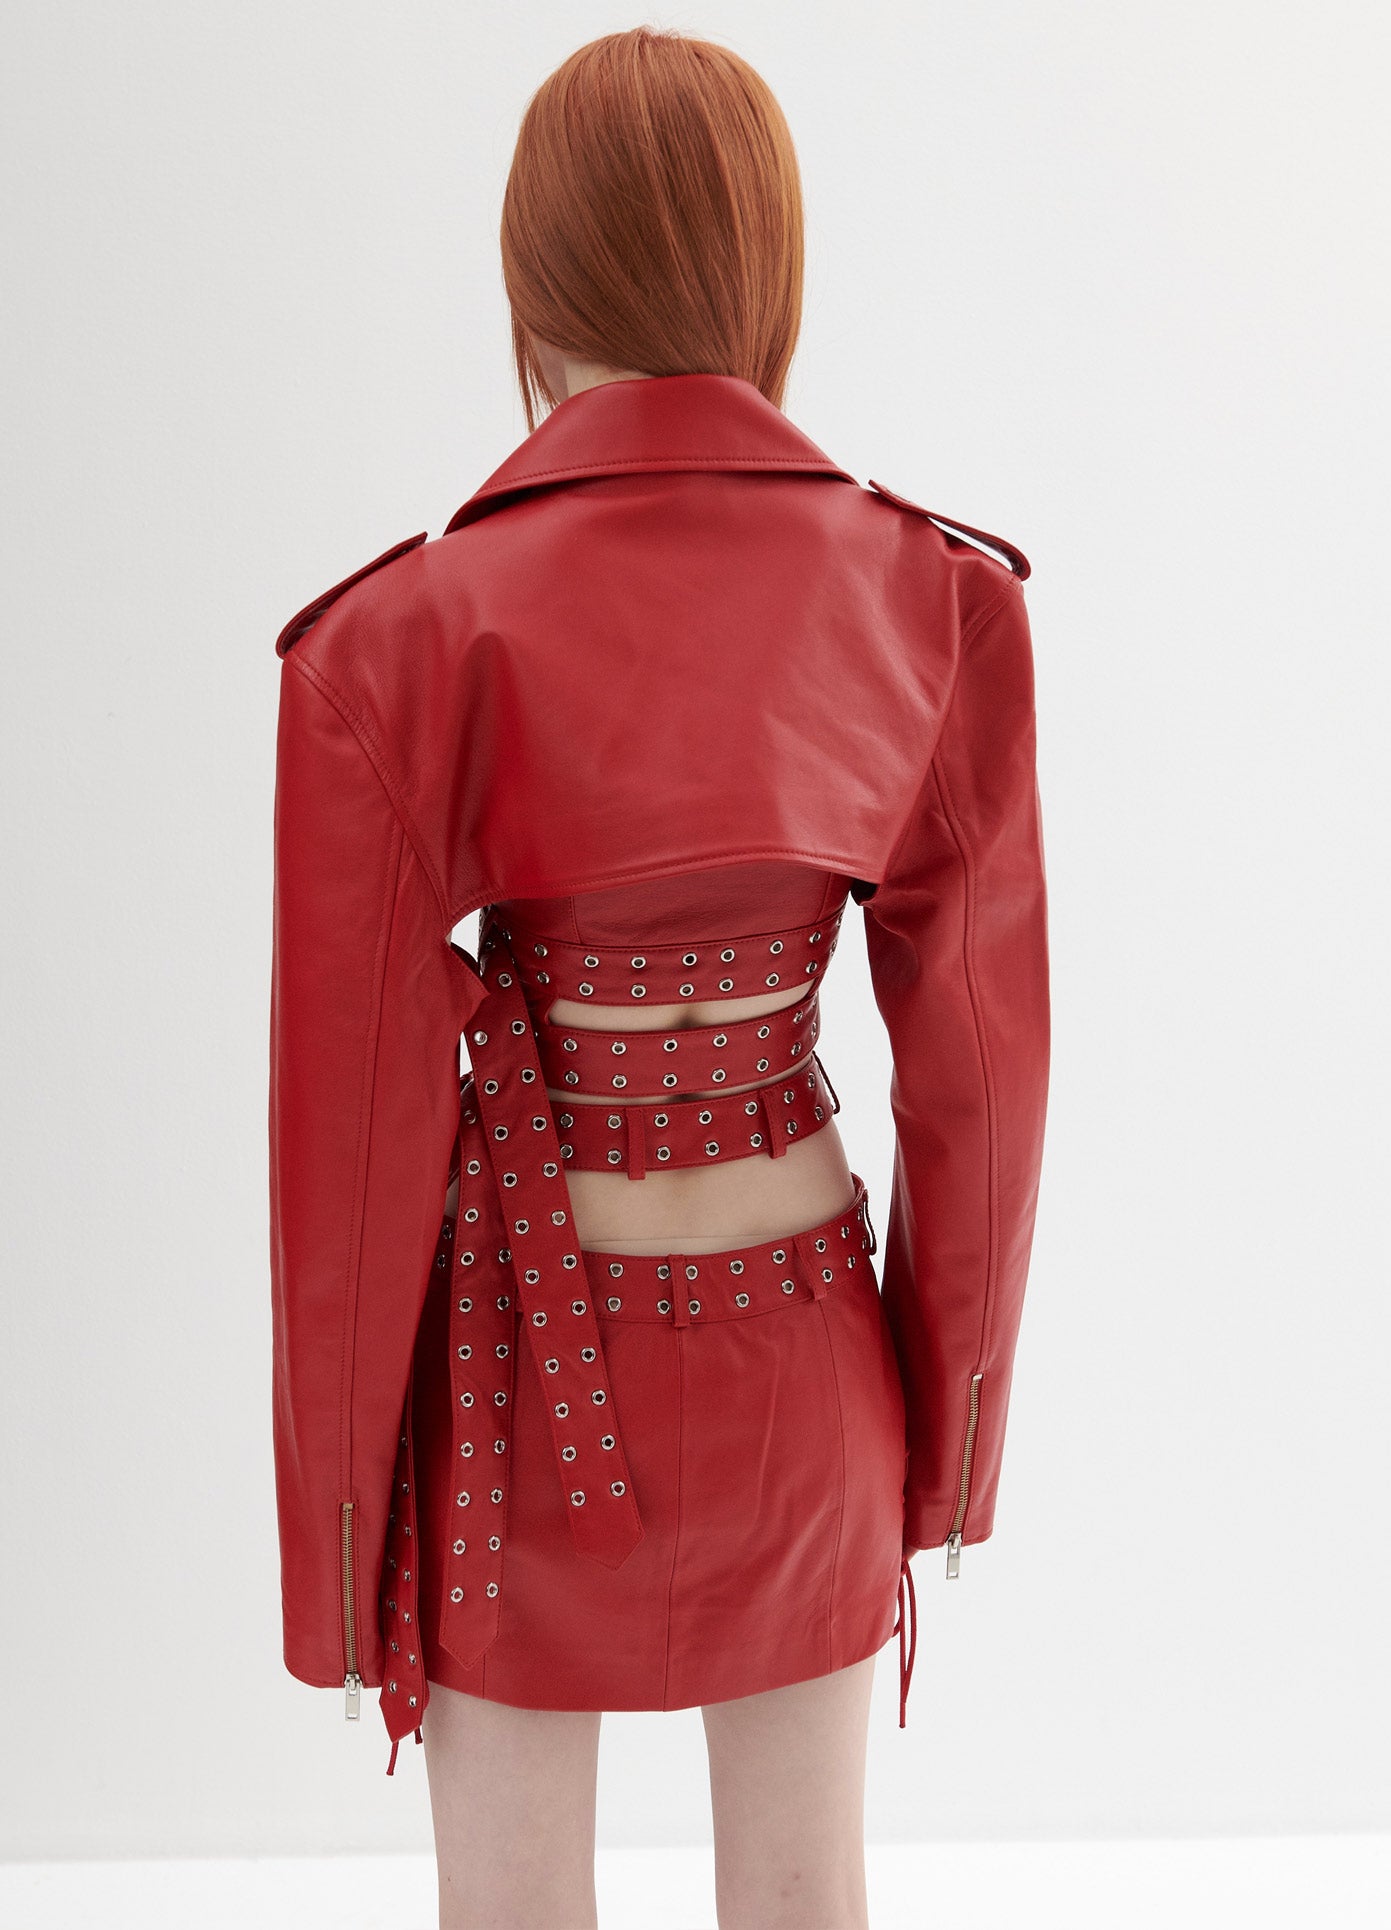 MONSE Leather Criss Cross Mini Skirt in Red on Model Back View